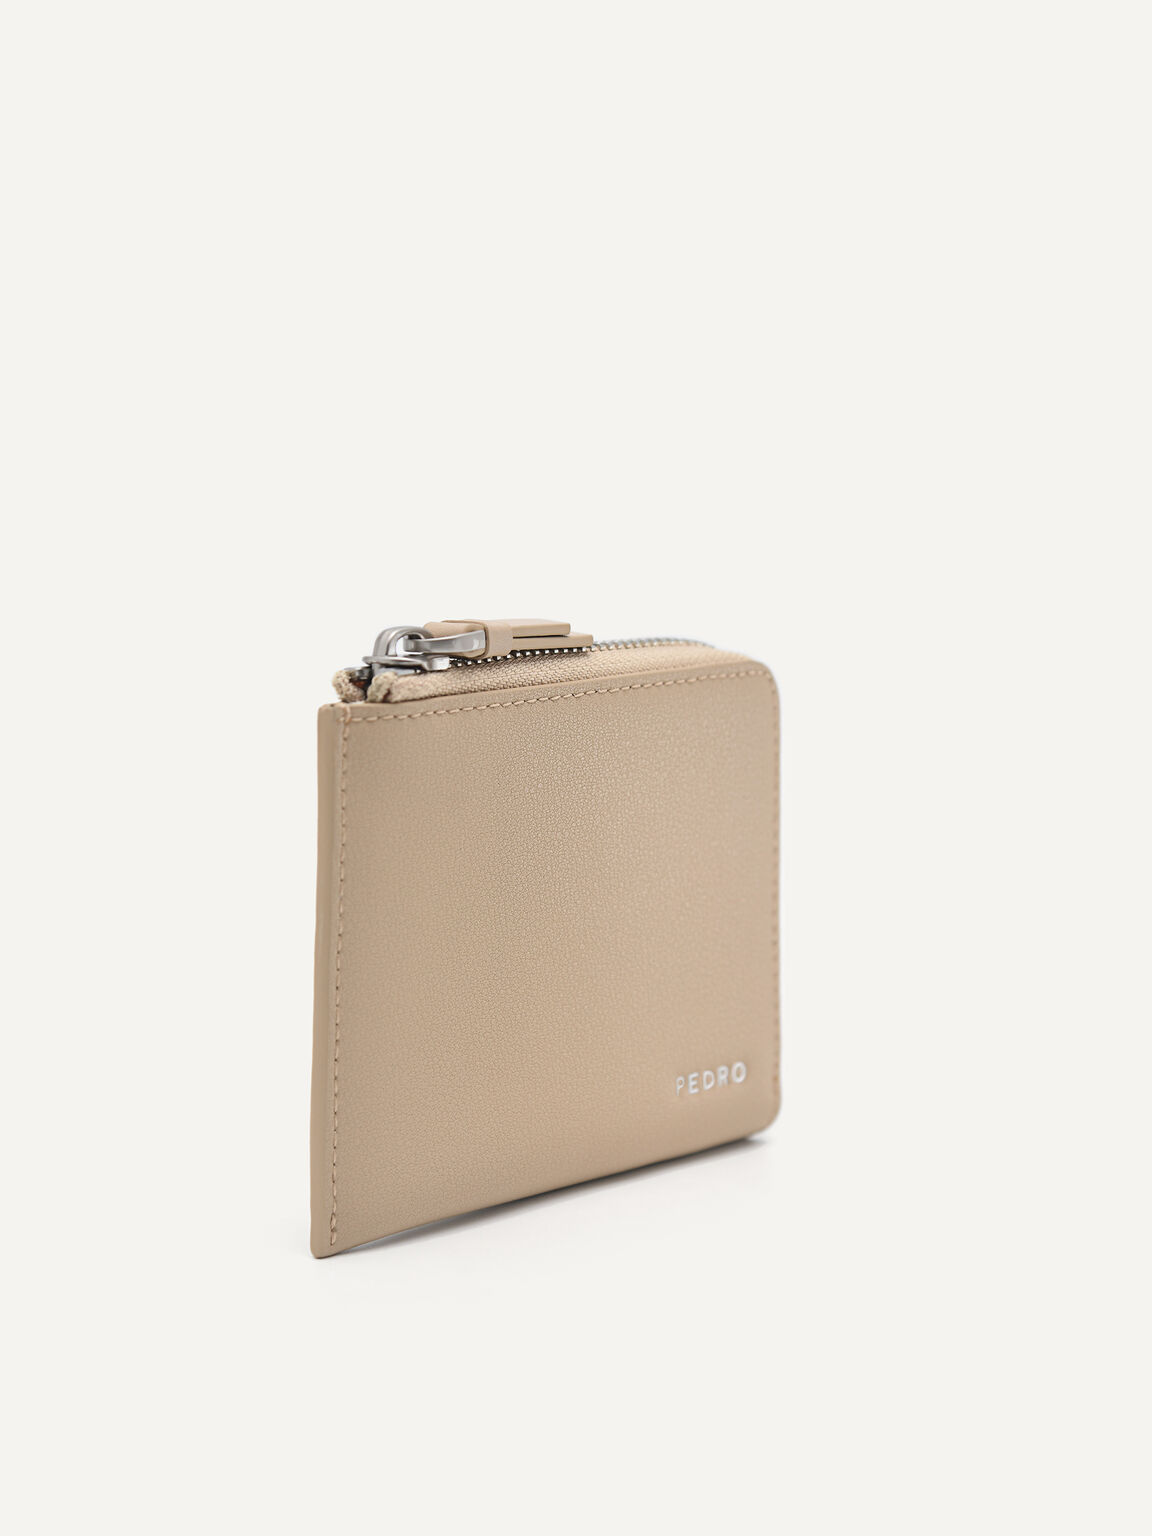 Unisex Leather Zipper Wallet, Sand